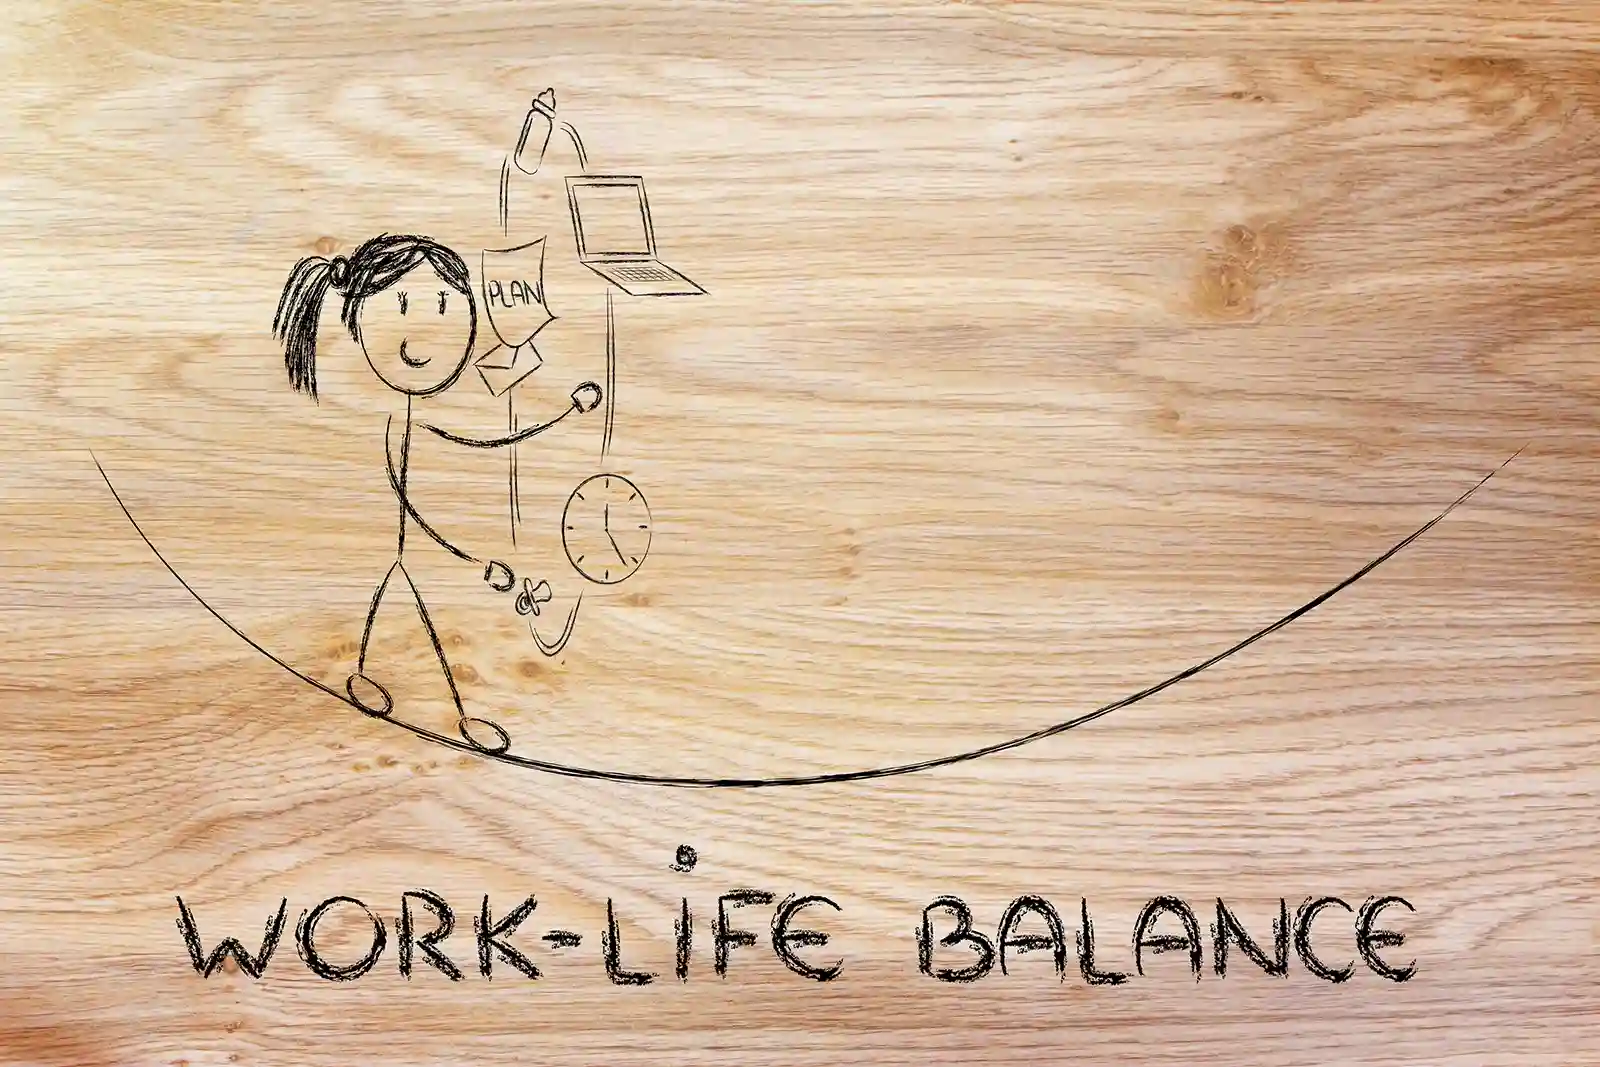 Work life balance and managing stress at work